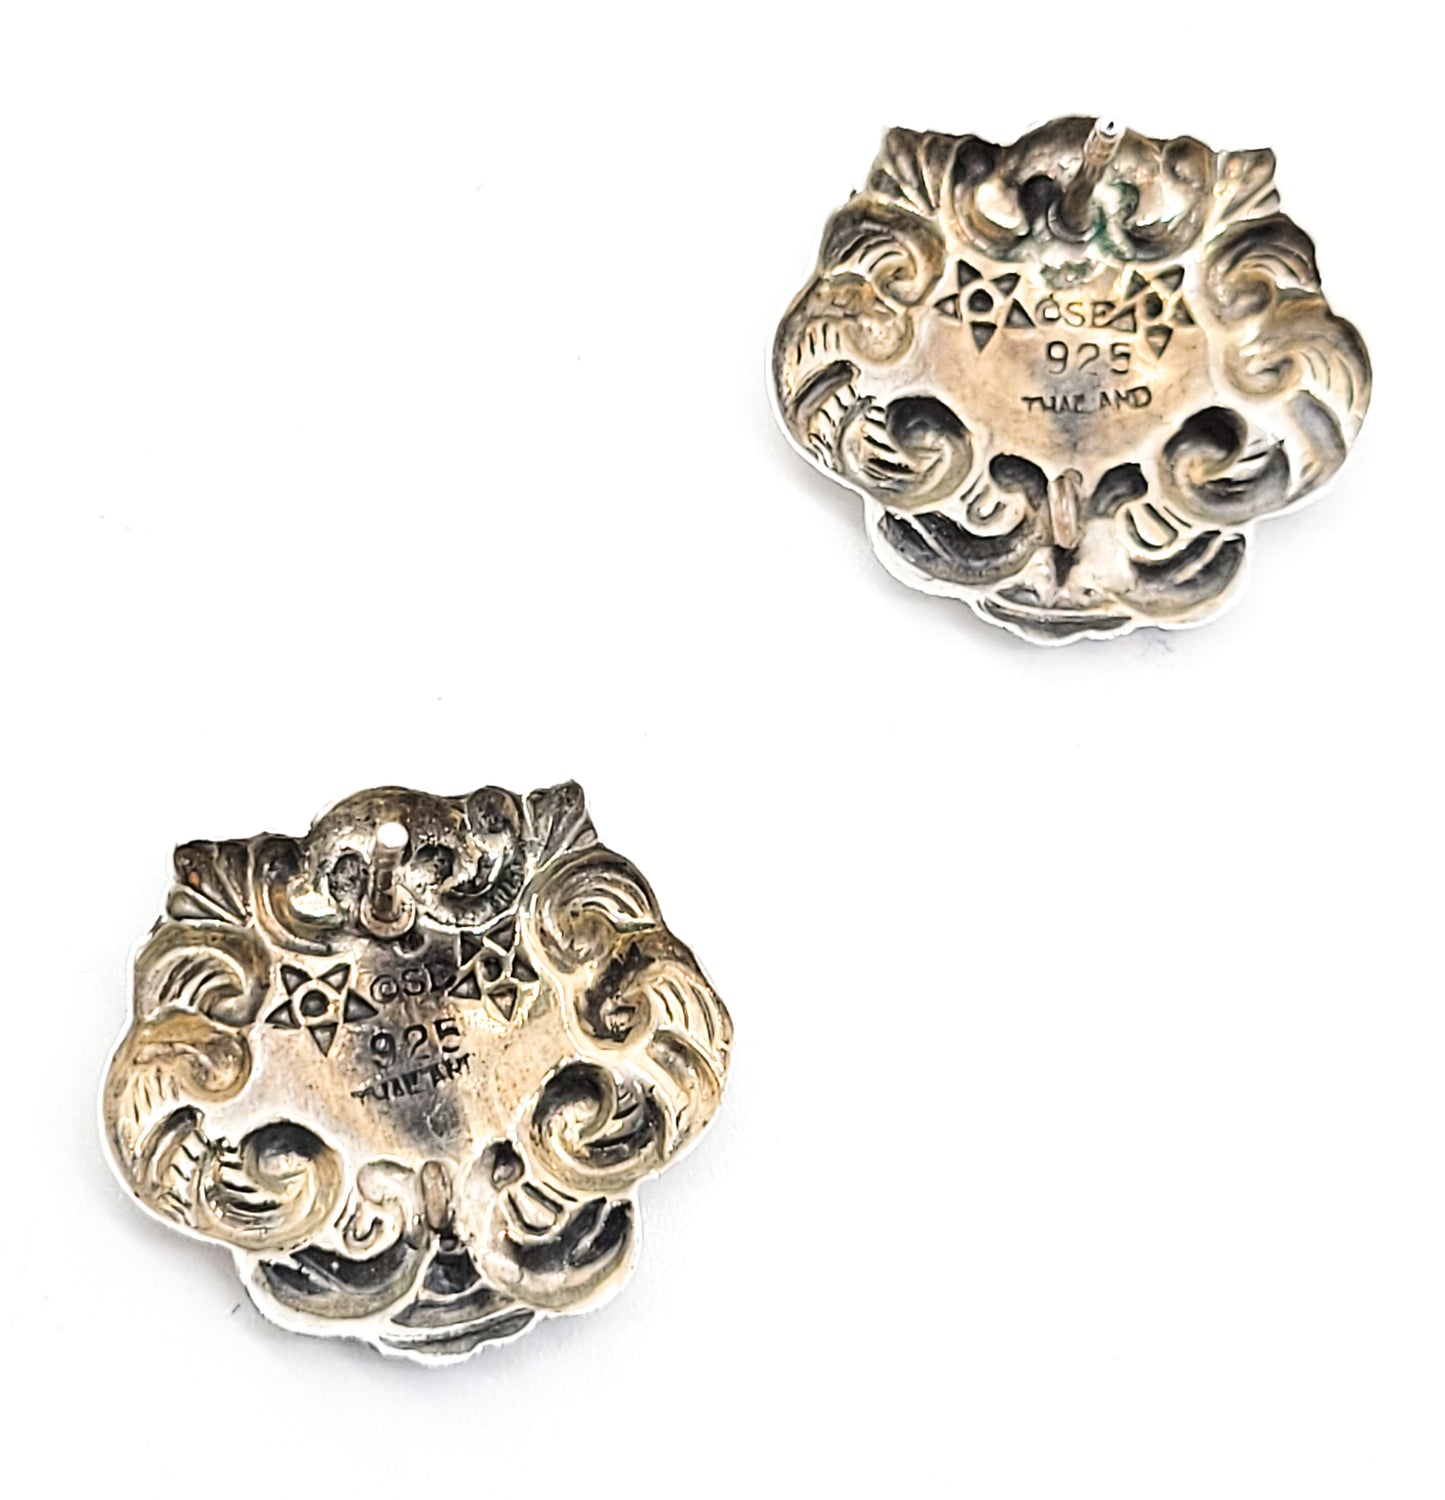 Art Nouveau style repousse shield sterling silver vintage earrings signed SE